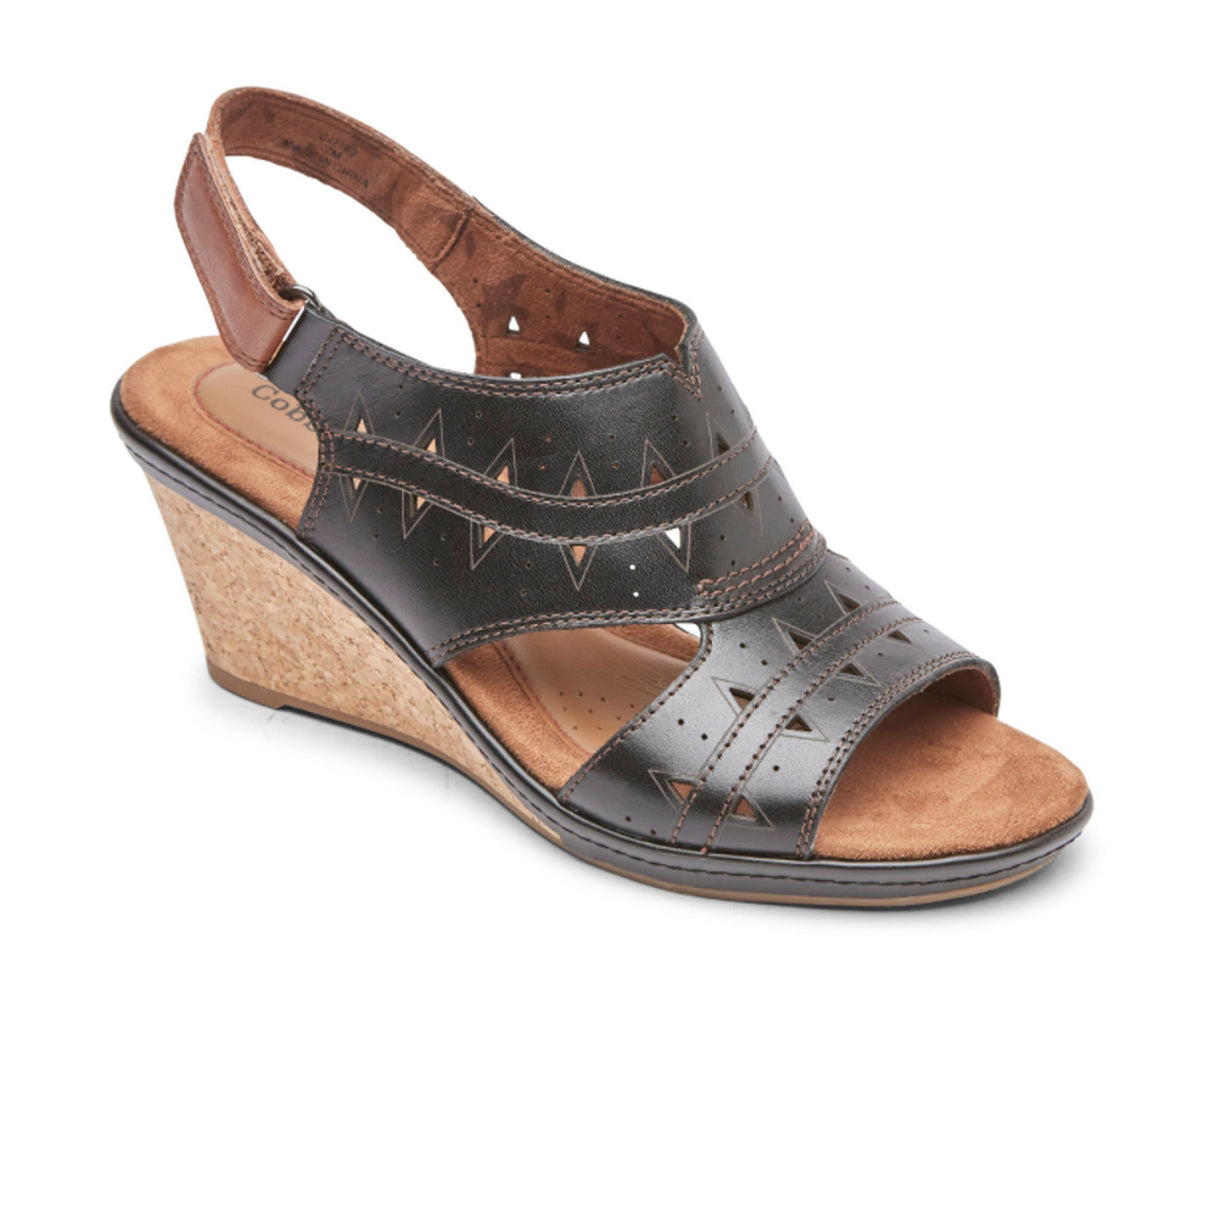 Cobb Hill Janna Perf Sling Wedge Sandal (Women) - Black Sandals - Heel/Wedge - The Heel Shoe Fitters